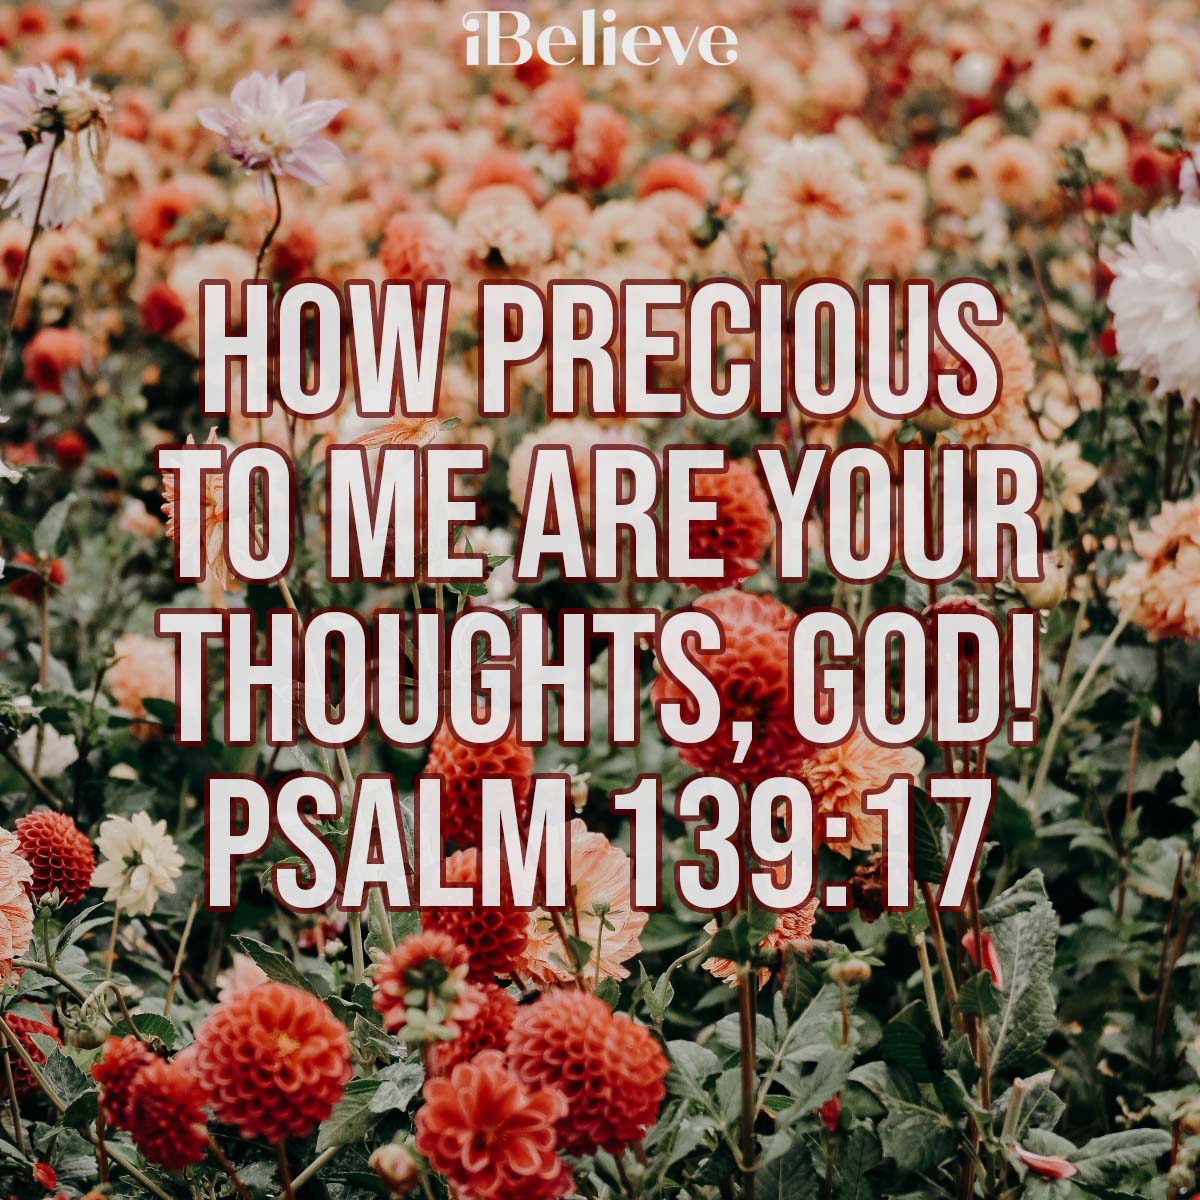 Psalm 139:17, inspirational image